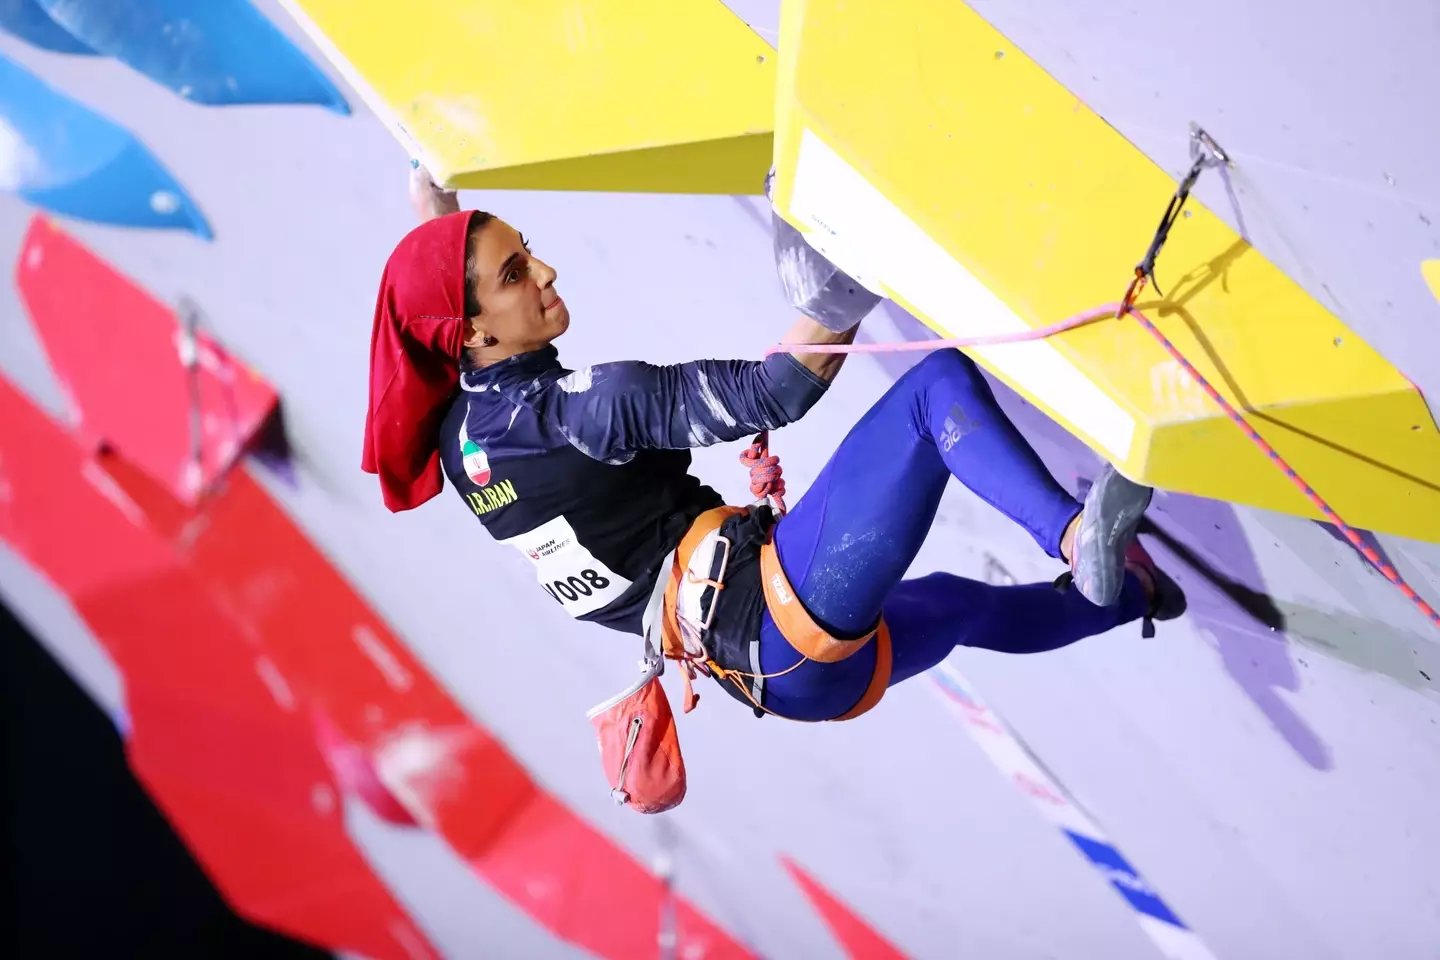 Rekabi climbing in the 2019 World Championships. Image: Alamy